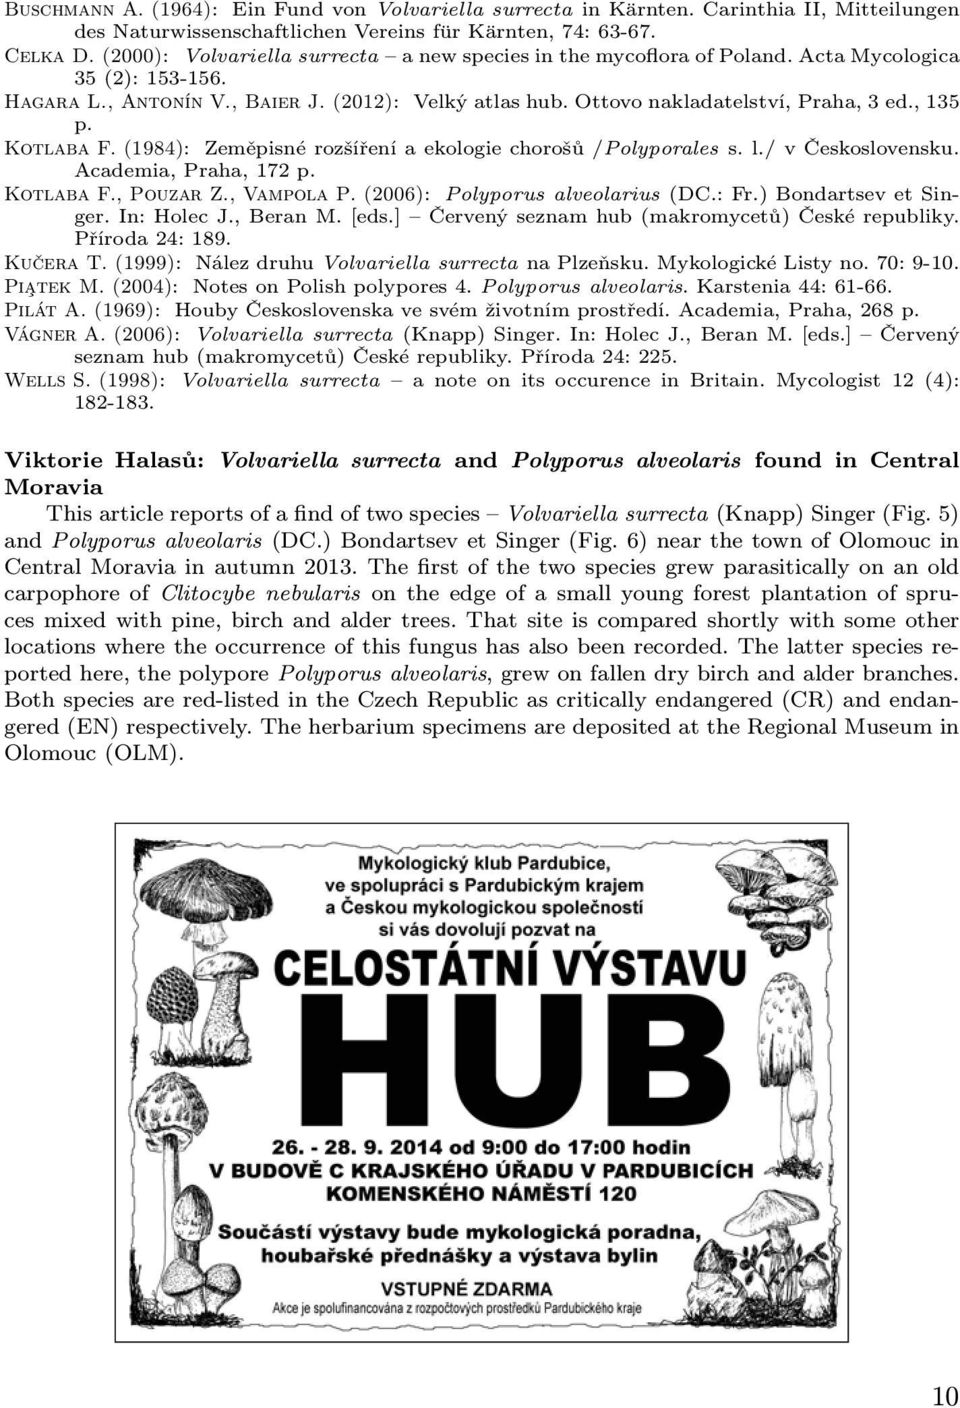 , 135 p. Kotlaba F. (1984): Zeměpisné rozšíření a ekologie chorošů /Polyporales s. l./ v Československu. Academia, Praha, 172 p. Kotlaba F., Pouzar Z., Vampola P. (2006): Polyporus alveolarius (DC.